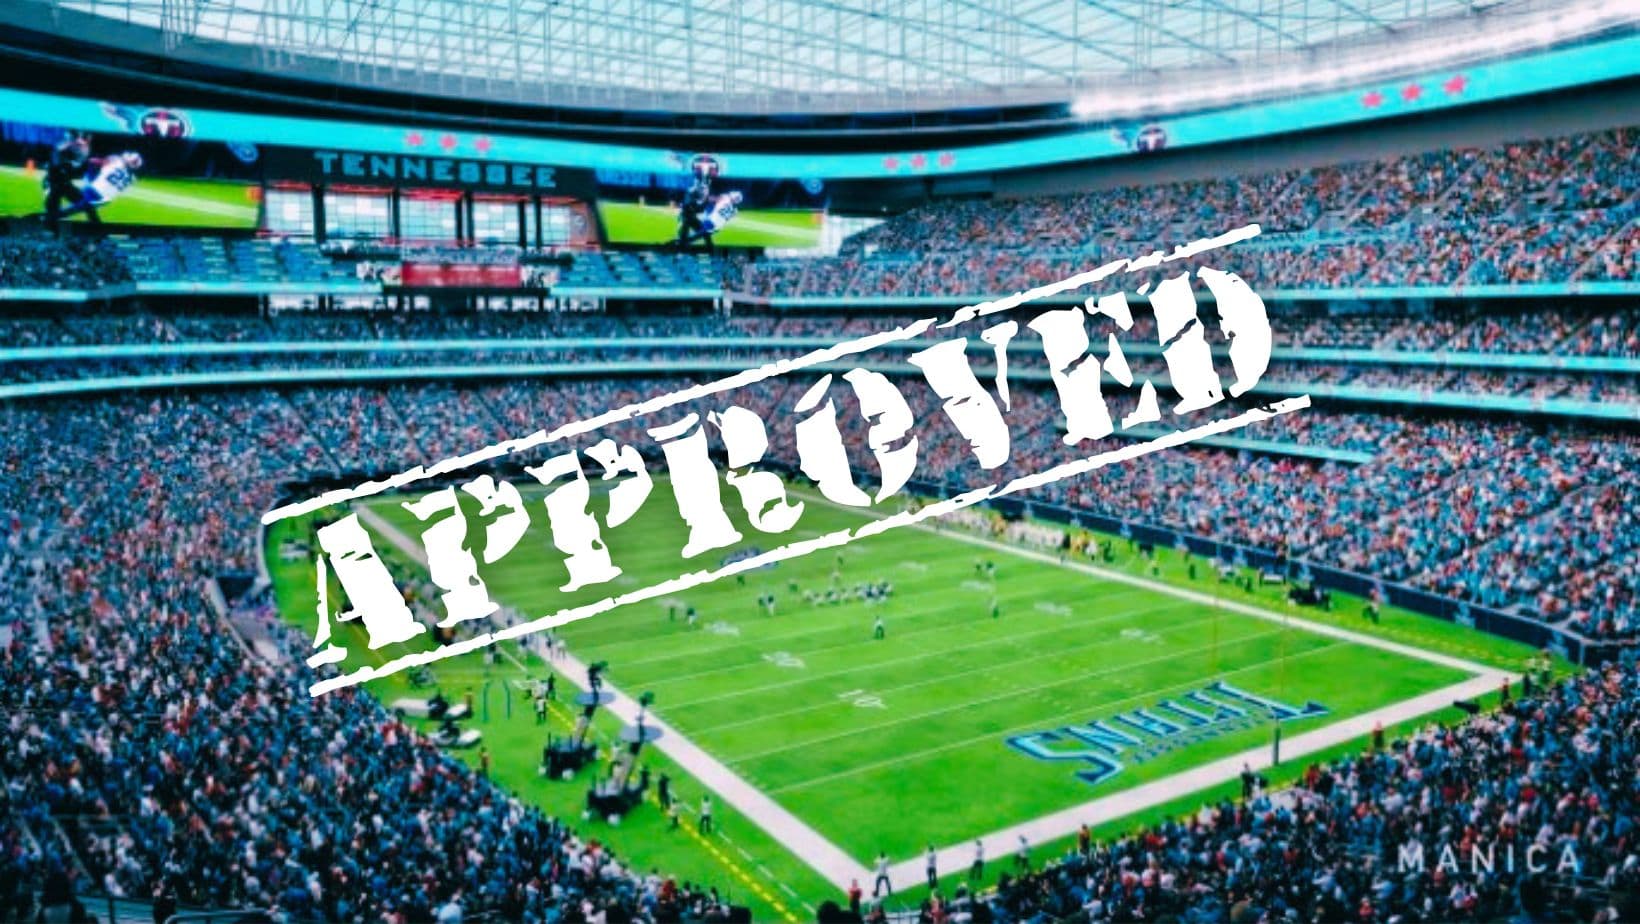 Nashville approves bonds for $2.1 billion Tennessee Titans NFL stadium